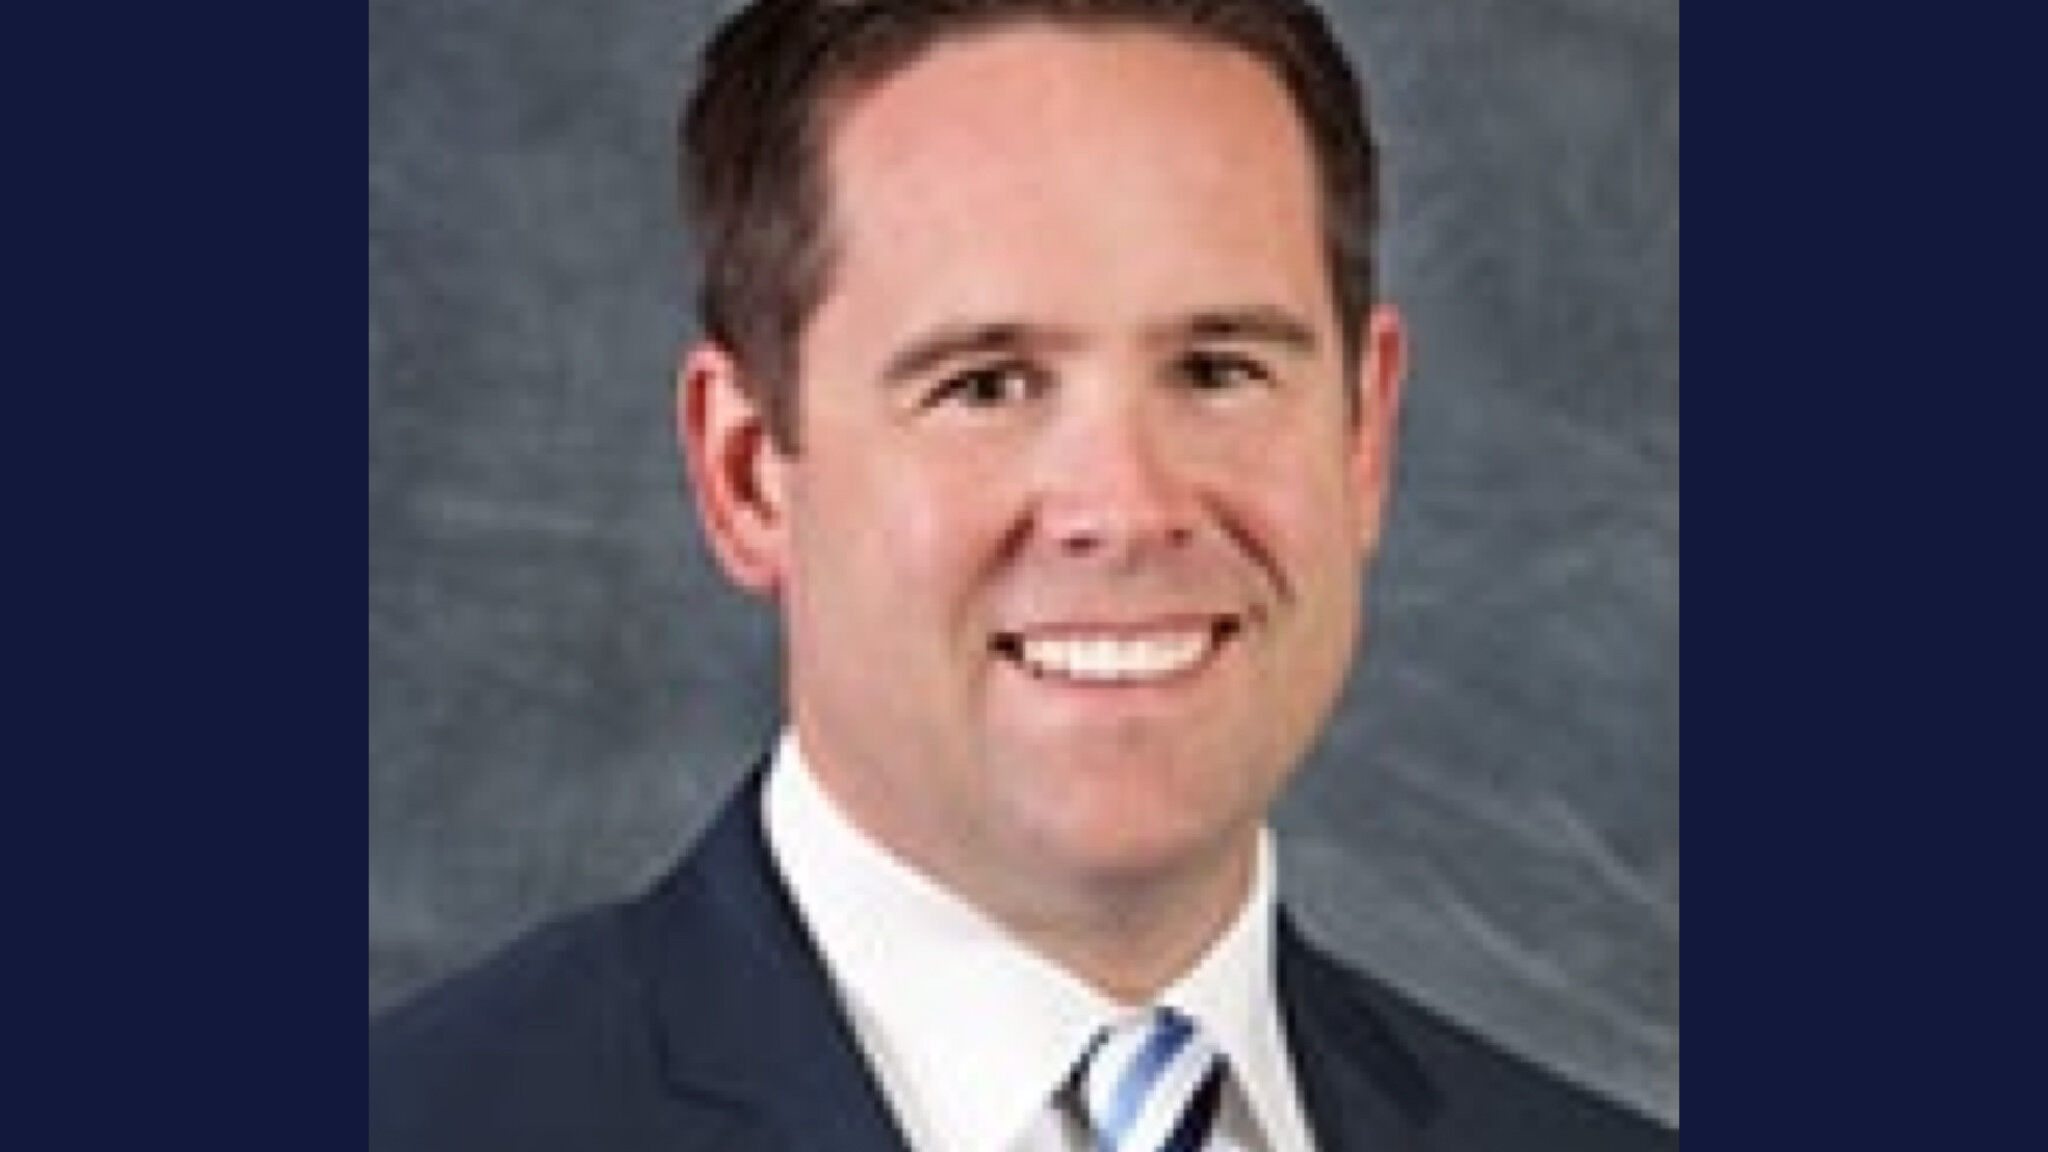 Utah County Councilman David Alvord